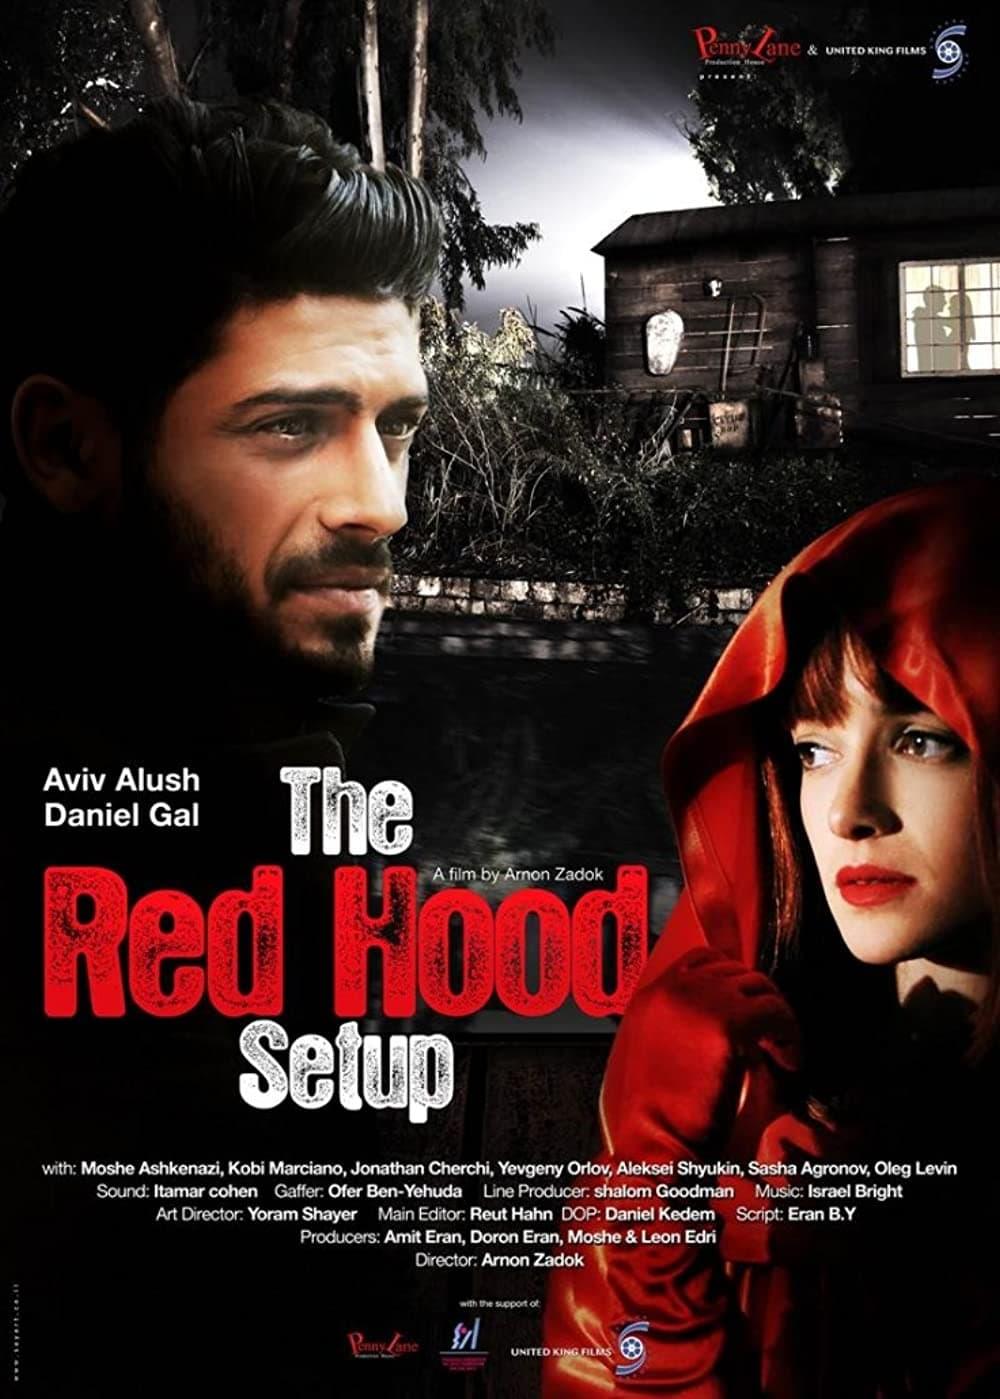 The Red Hood Setup poster